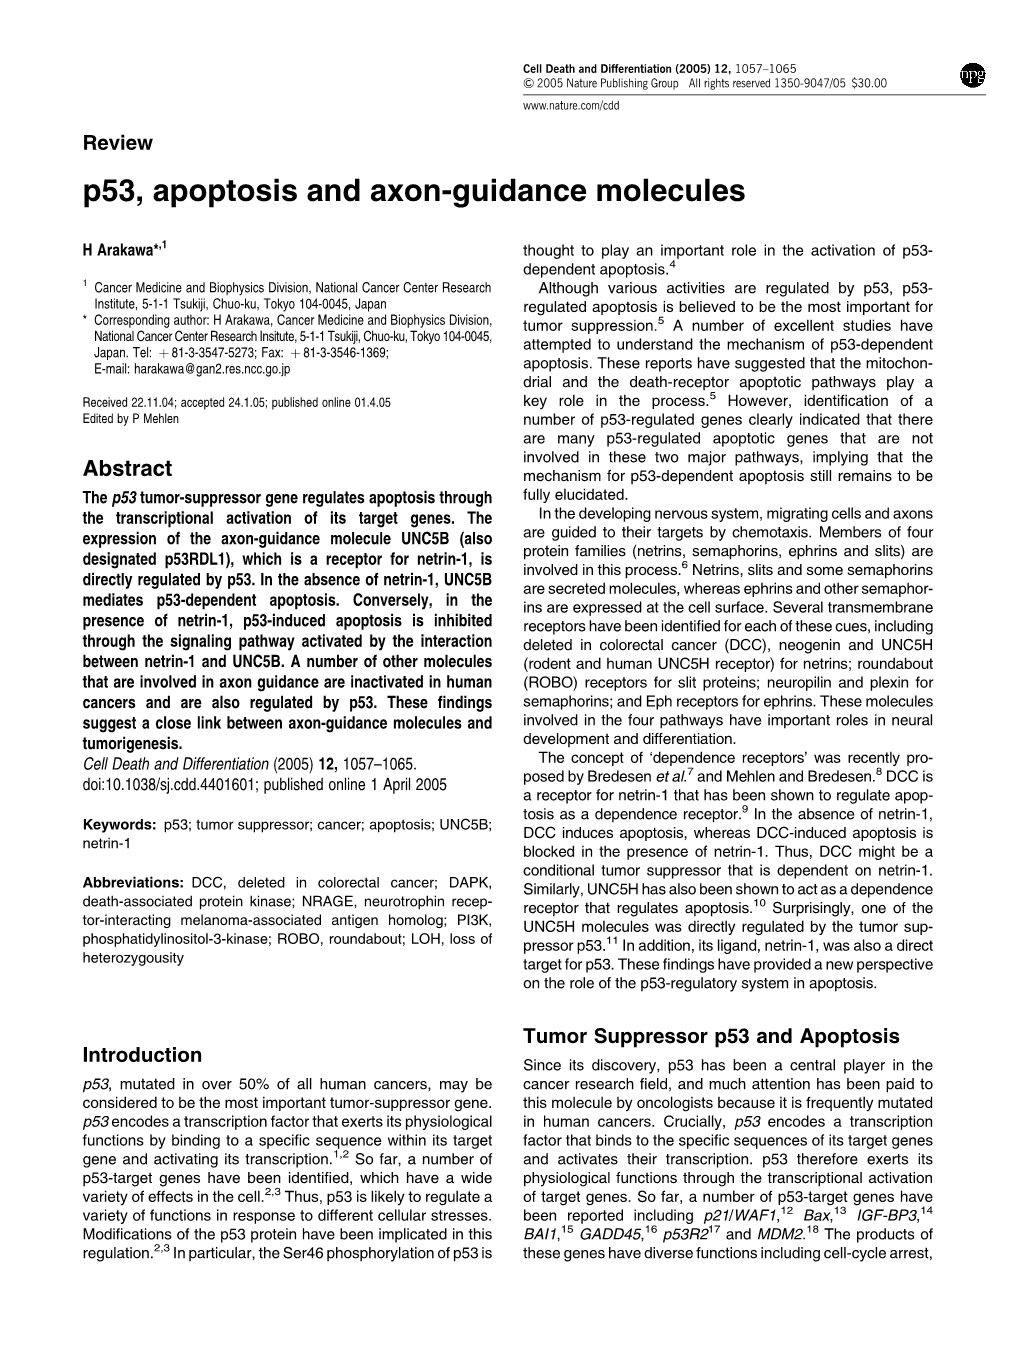 P53, Apoptosis and Axon-Guidance Molecules